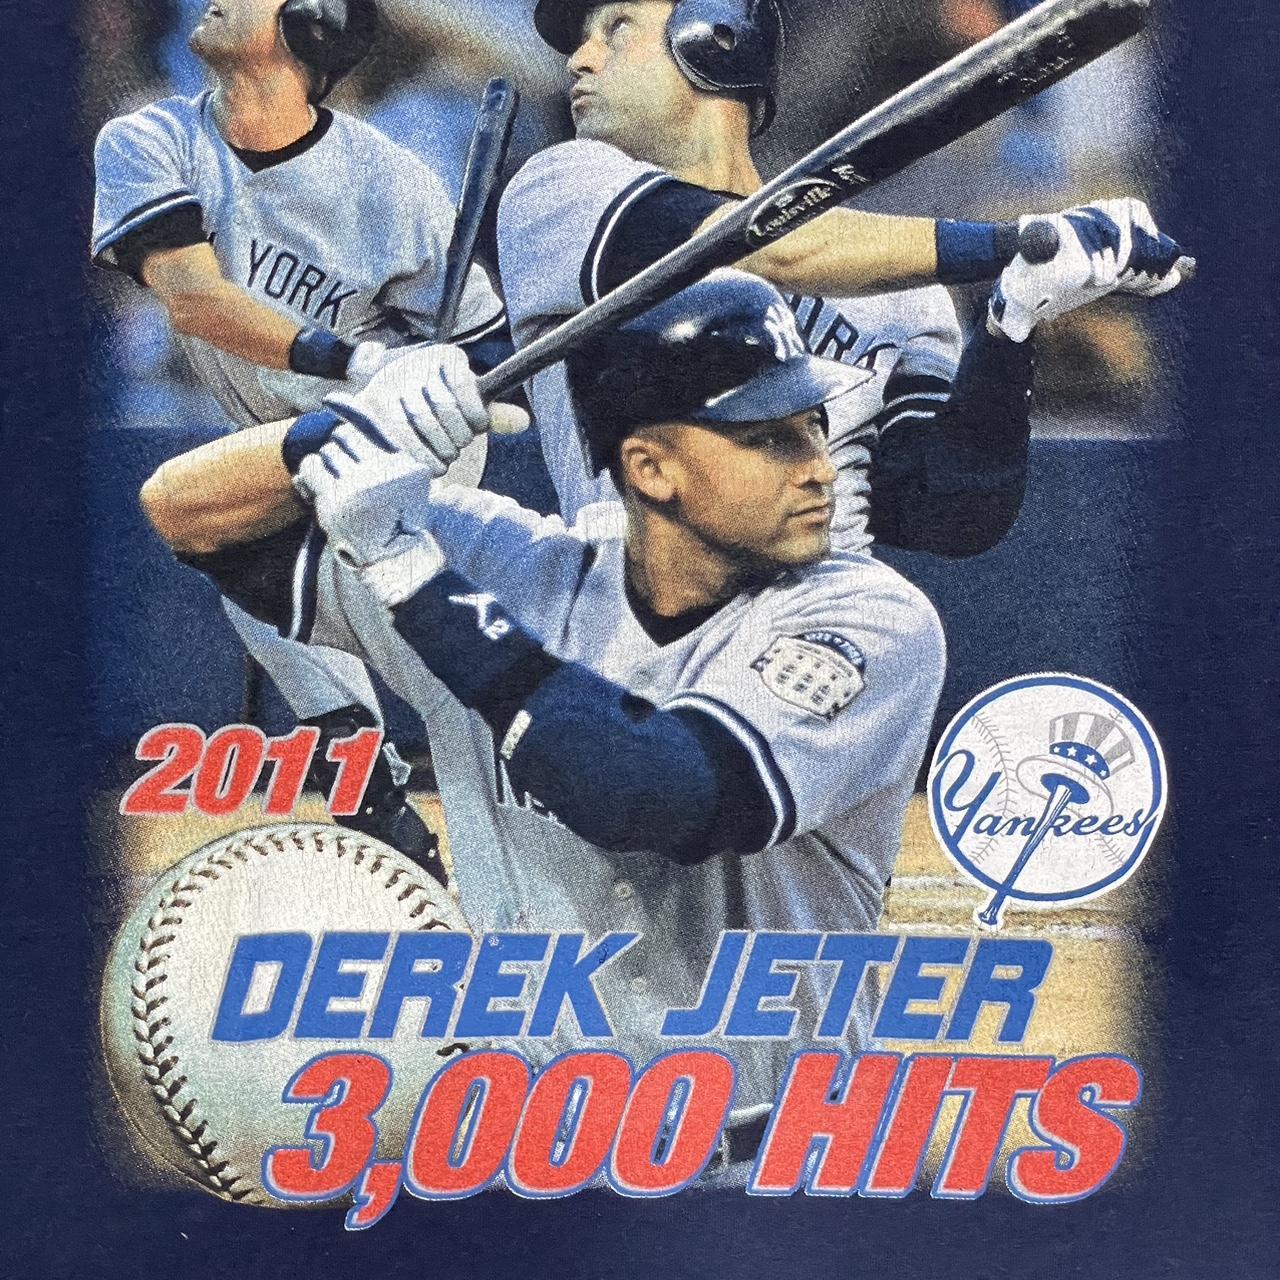 Derek Jeter 3,000 Hits Commemorative T-shirt by - Depop